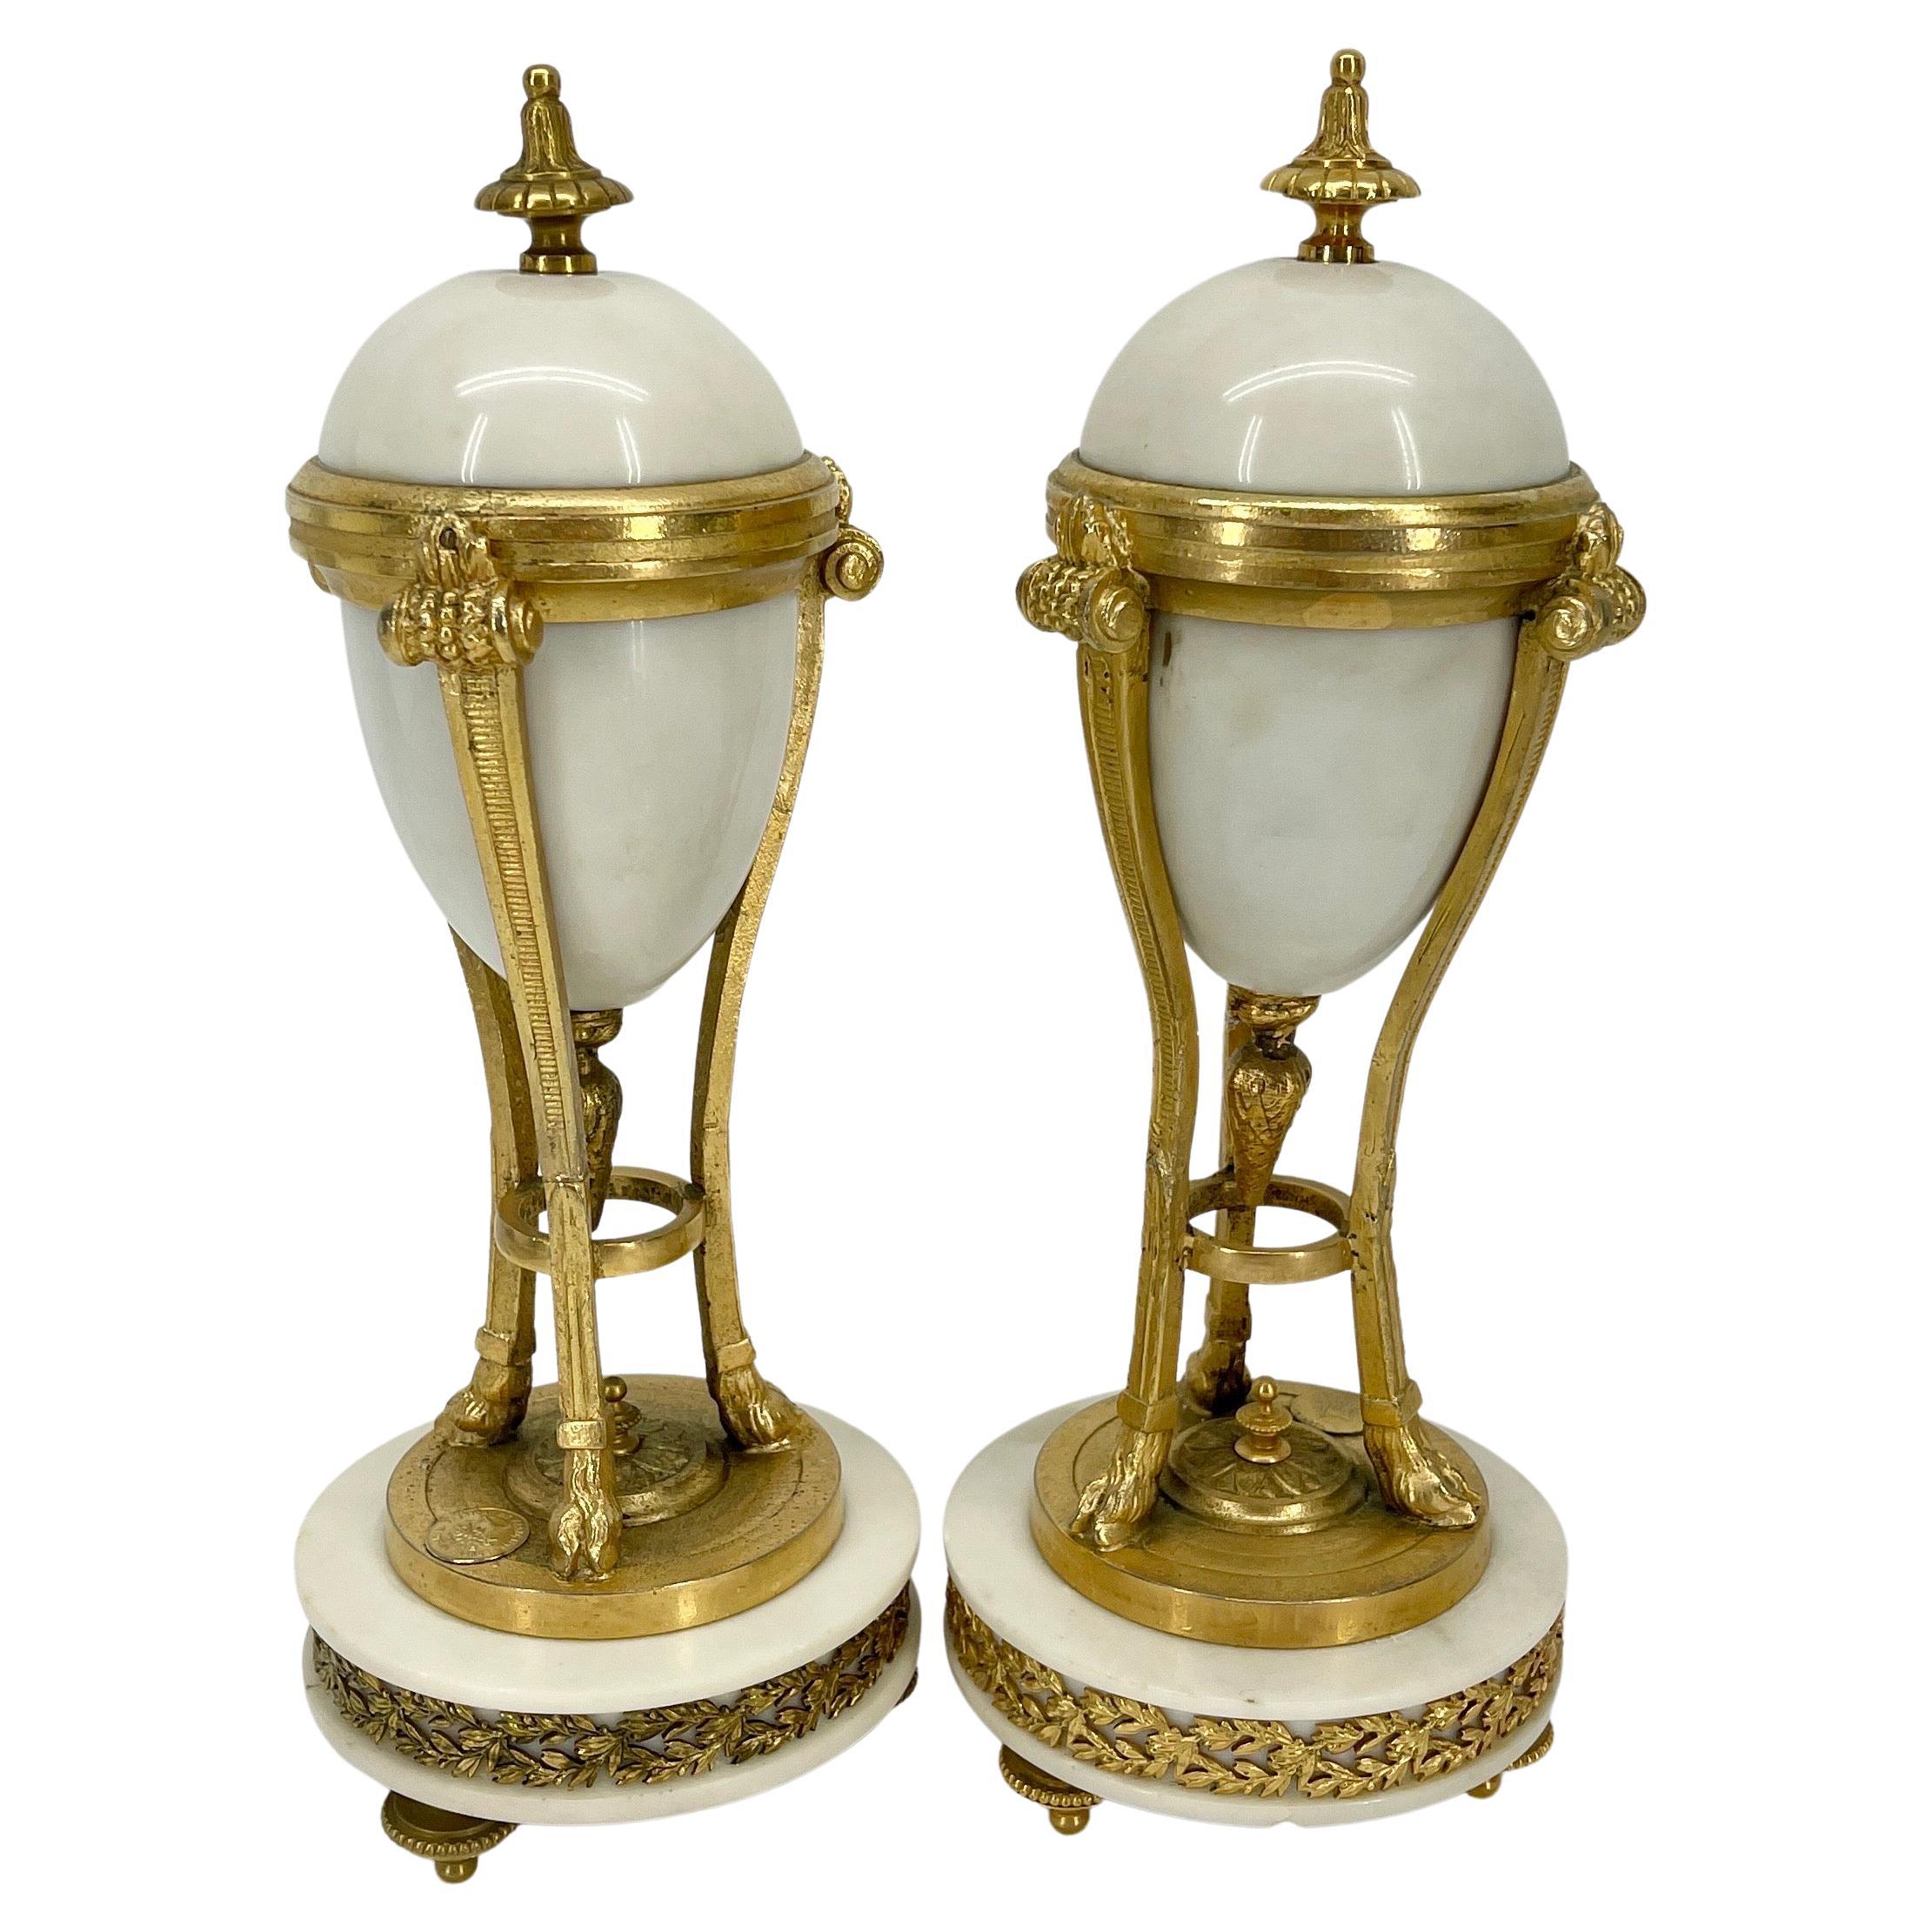 French Louis XVI Style Gilt Bronze-Mounted White Marble Urns